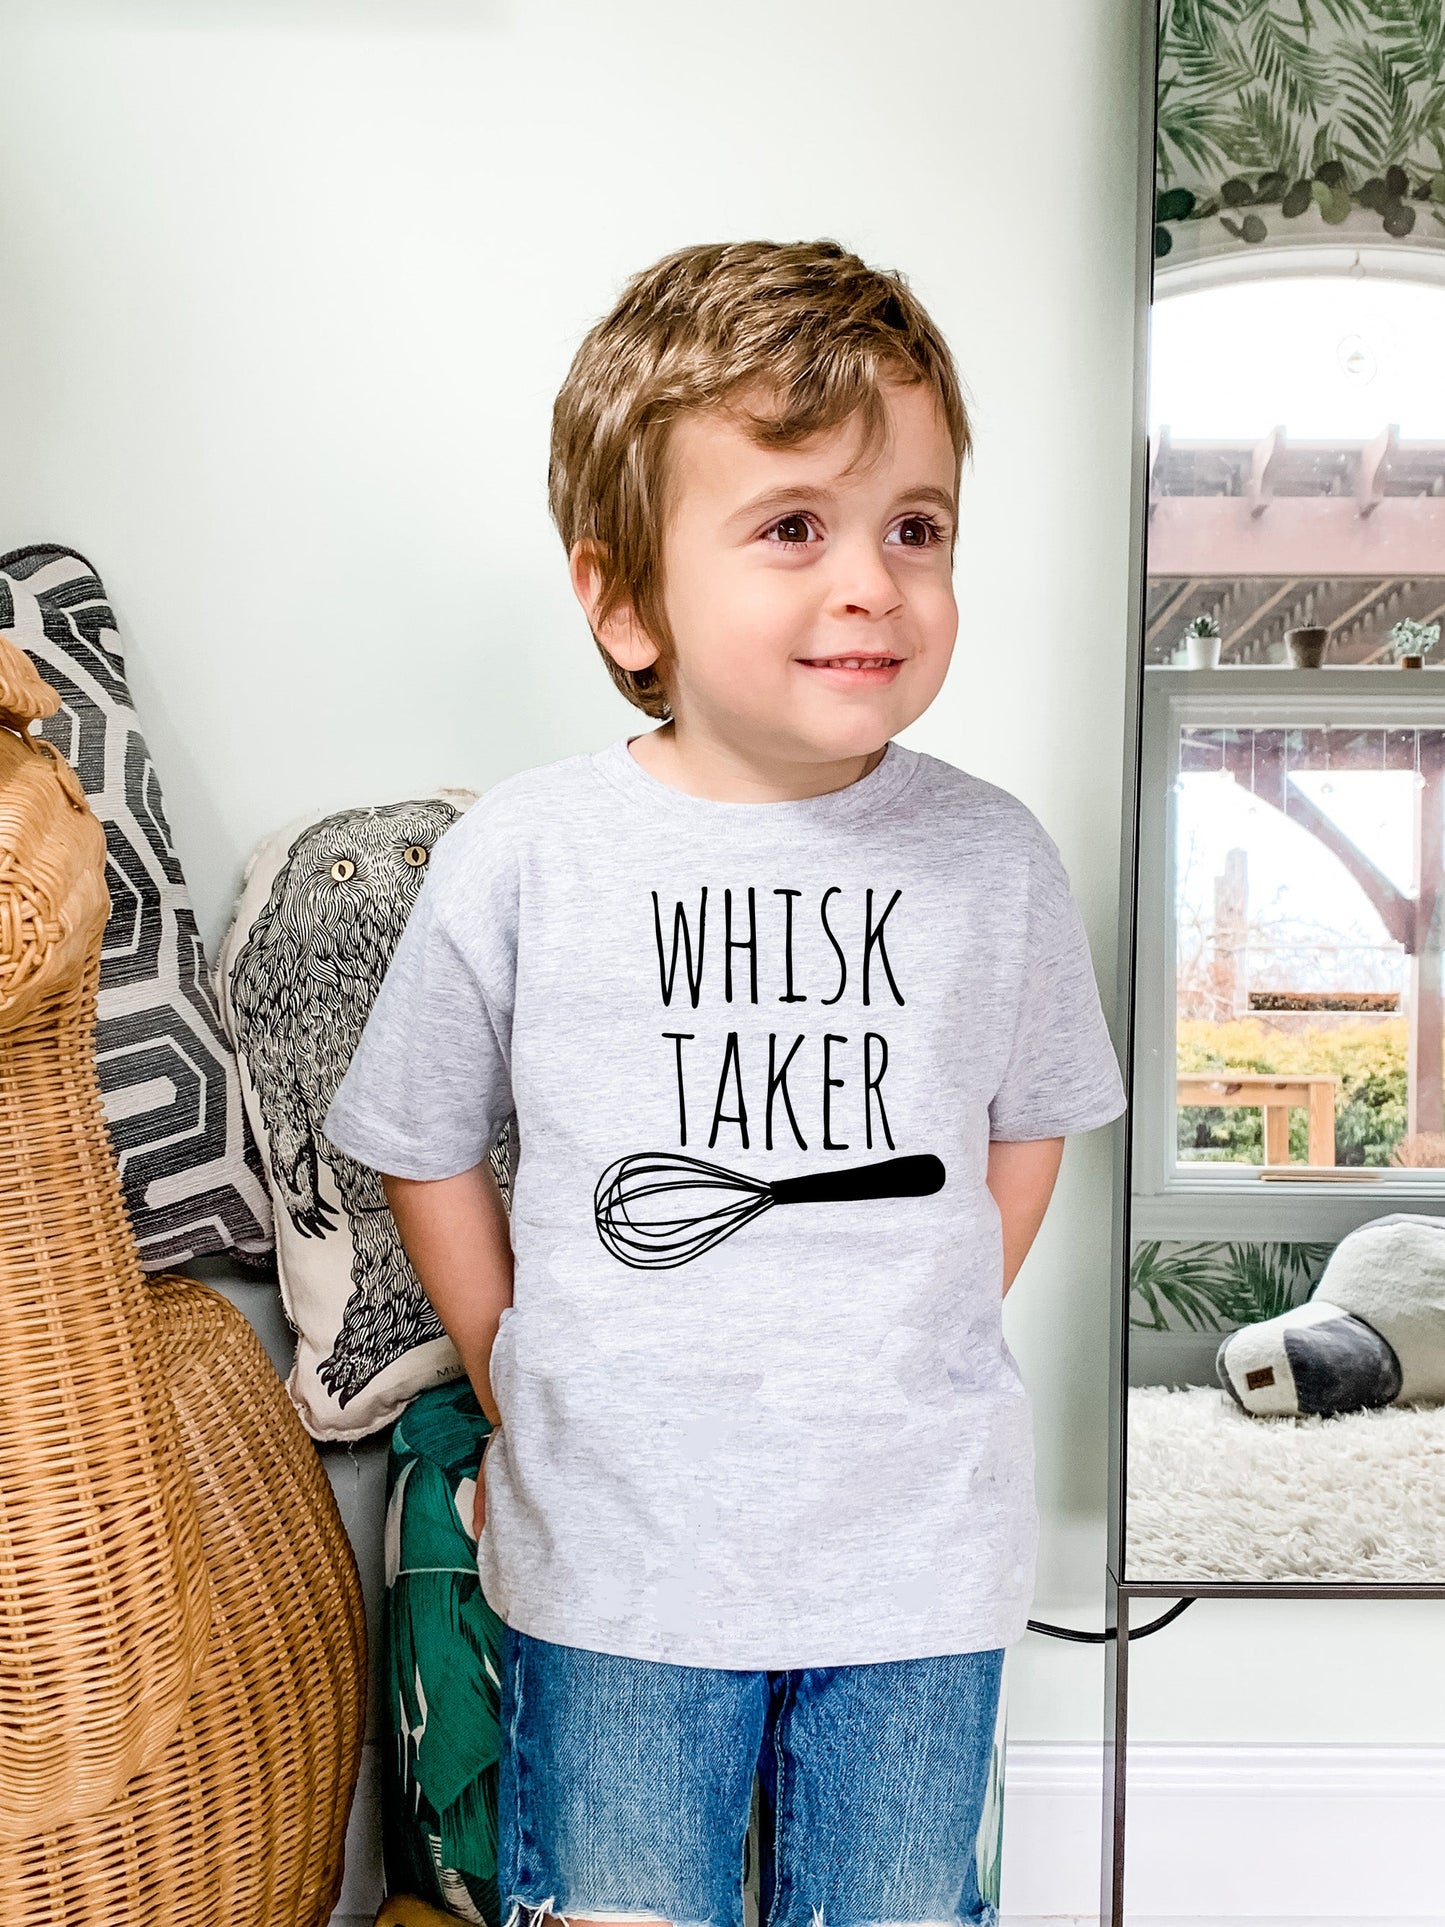 Whisk Taker (Baking) - Toddler Tee - Heather Gray